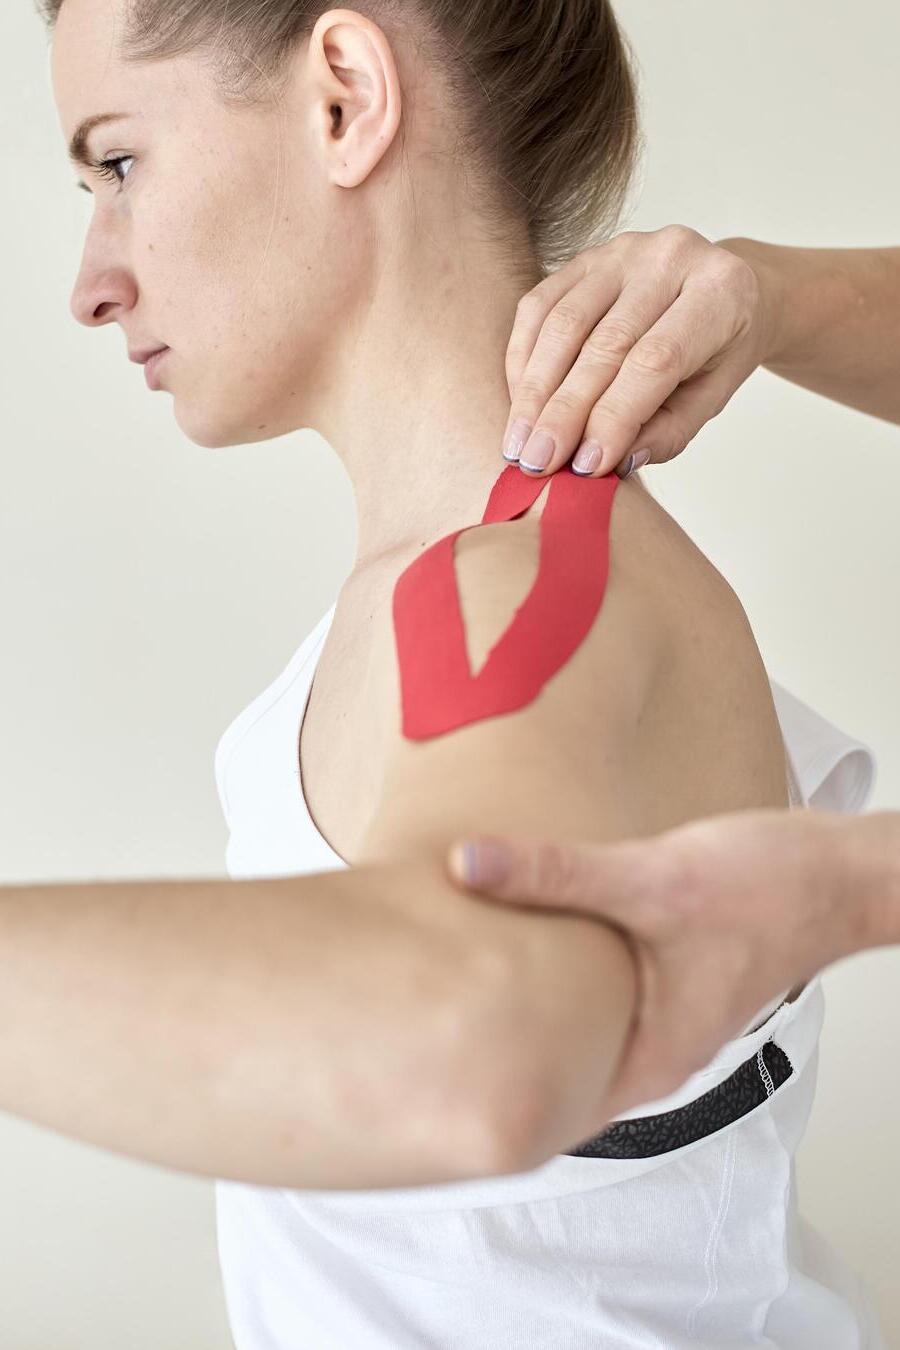 terapeuta tratando hombro vendaje neuromuscular